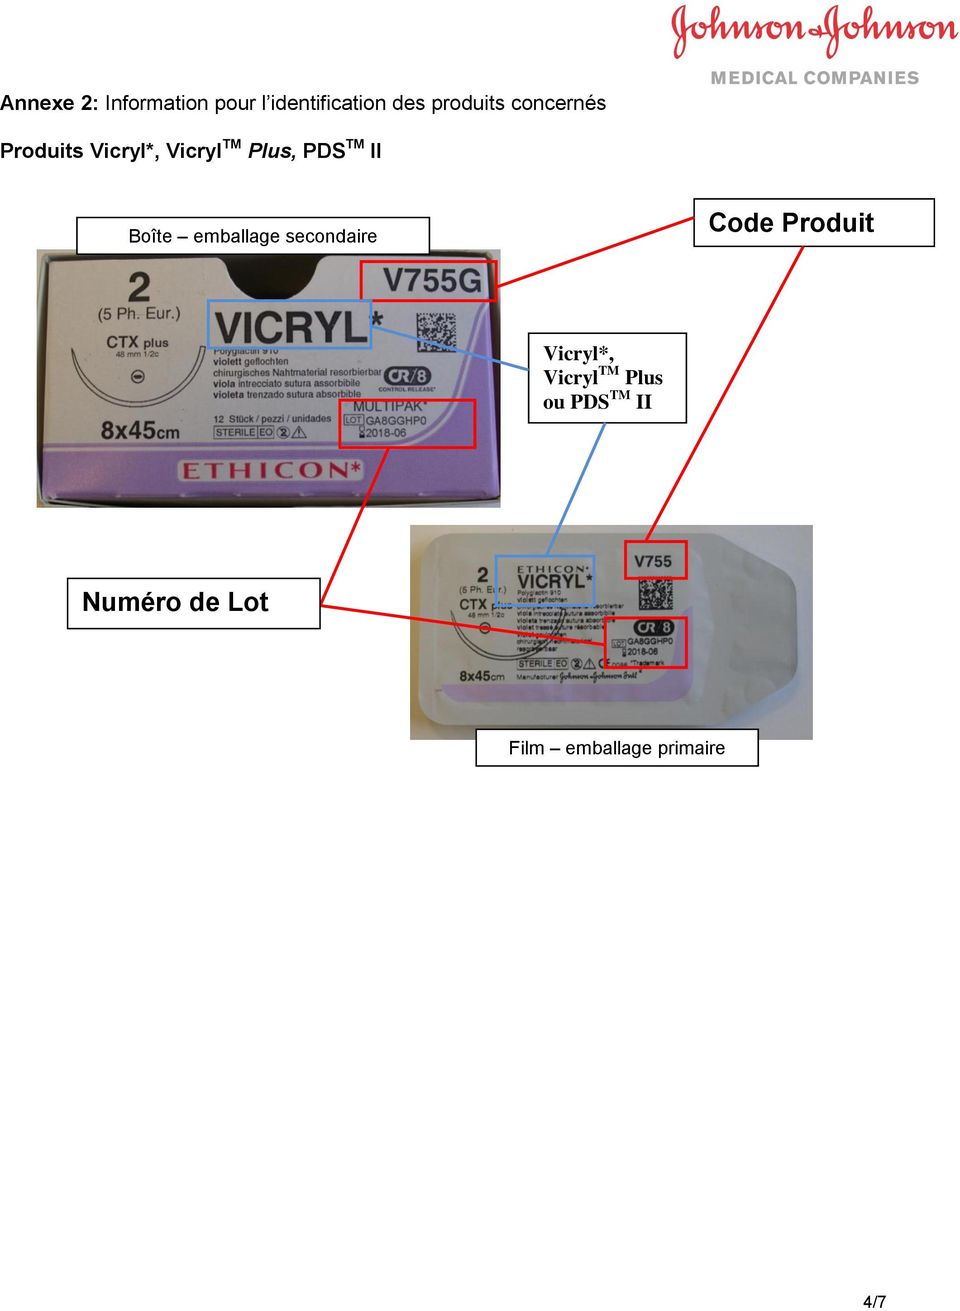 Boîte emballage secondaire Code Produit Vicryl*, Vicryl